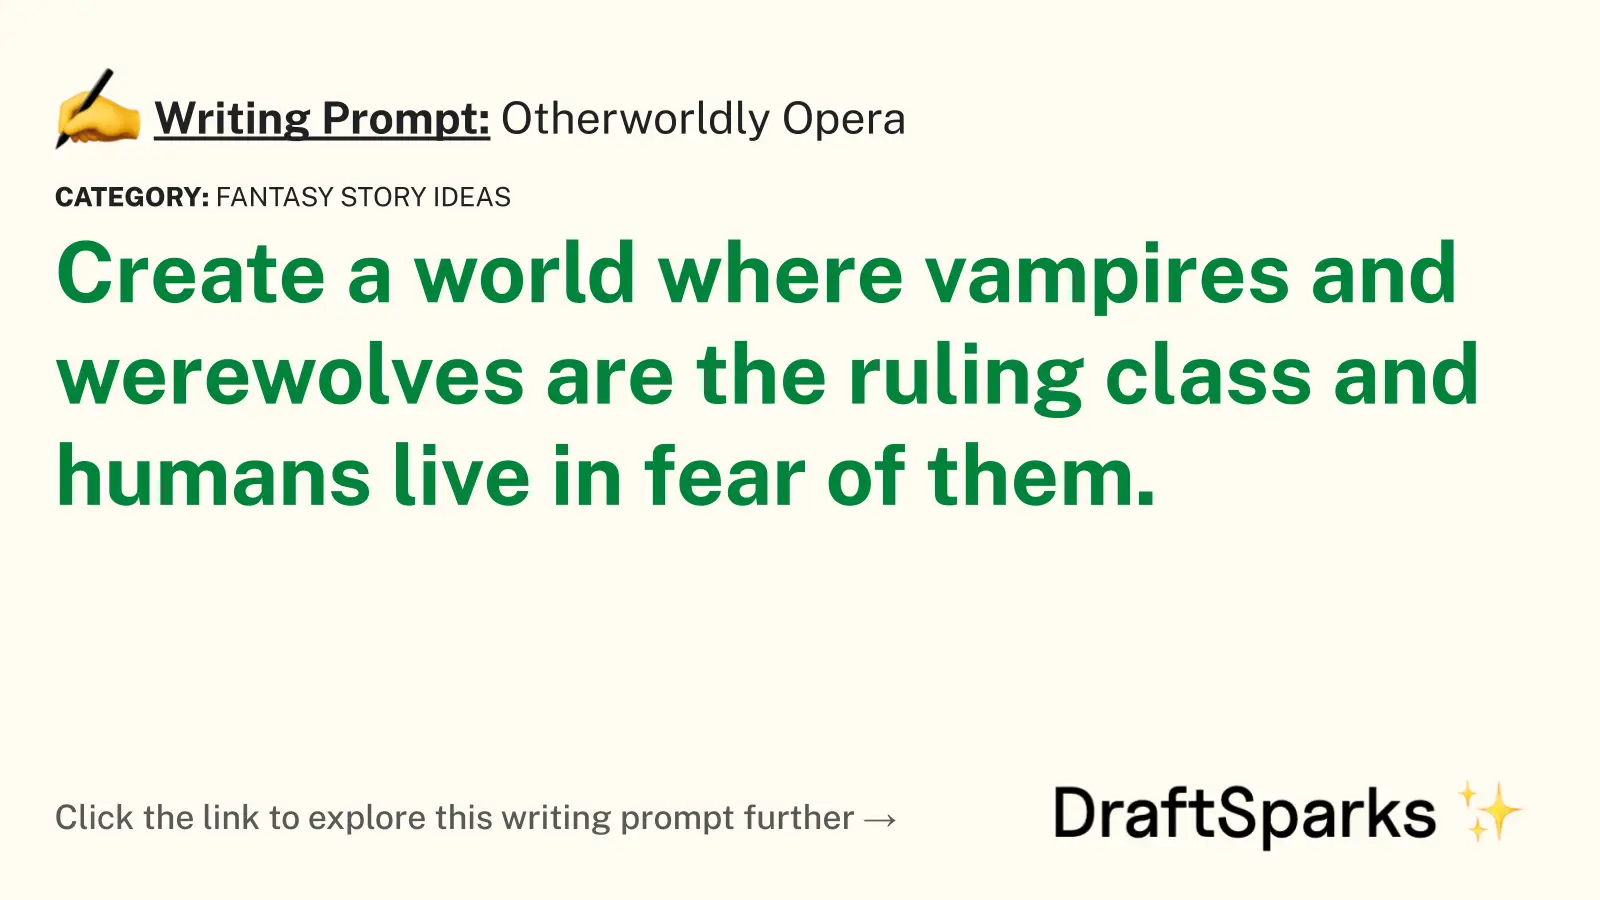 Otherworldly Opera